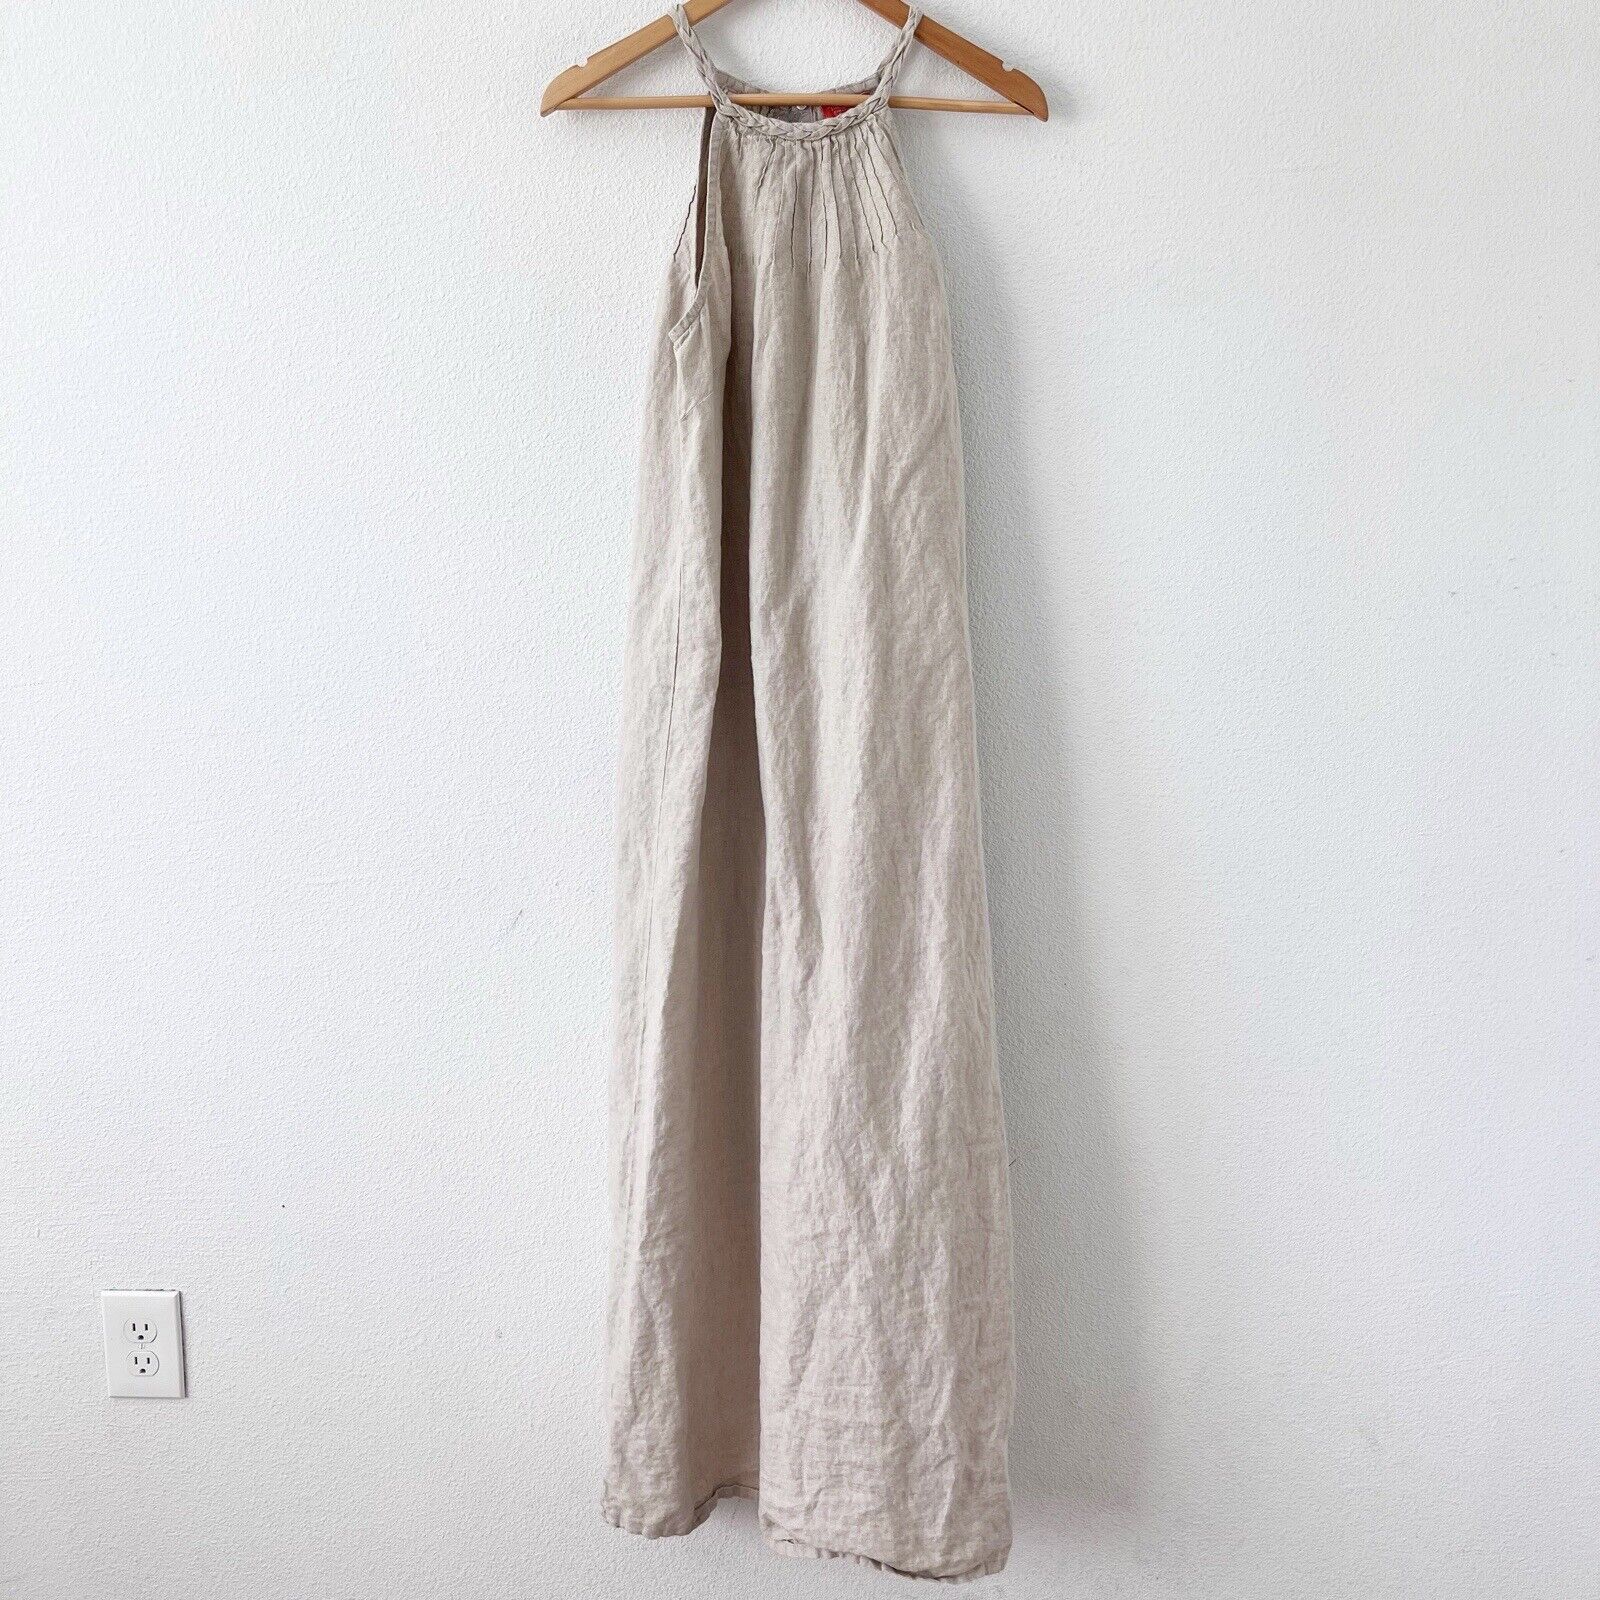 Relax Tommy Bahama Tan Linen Maxi Dress size 12 - image 1